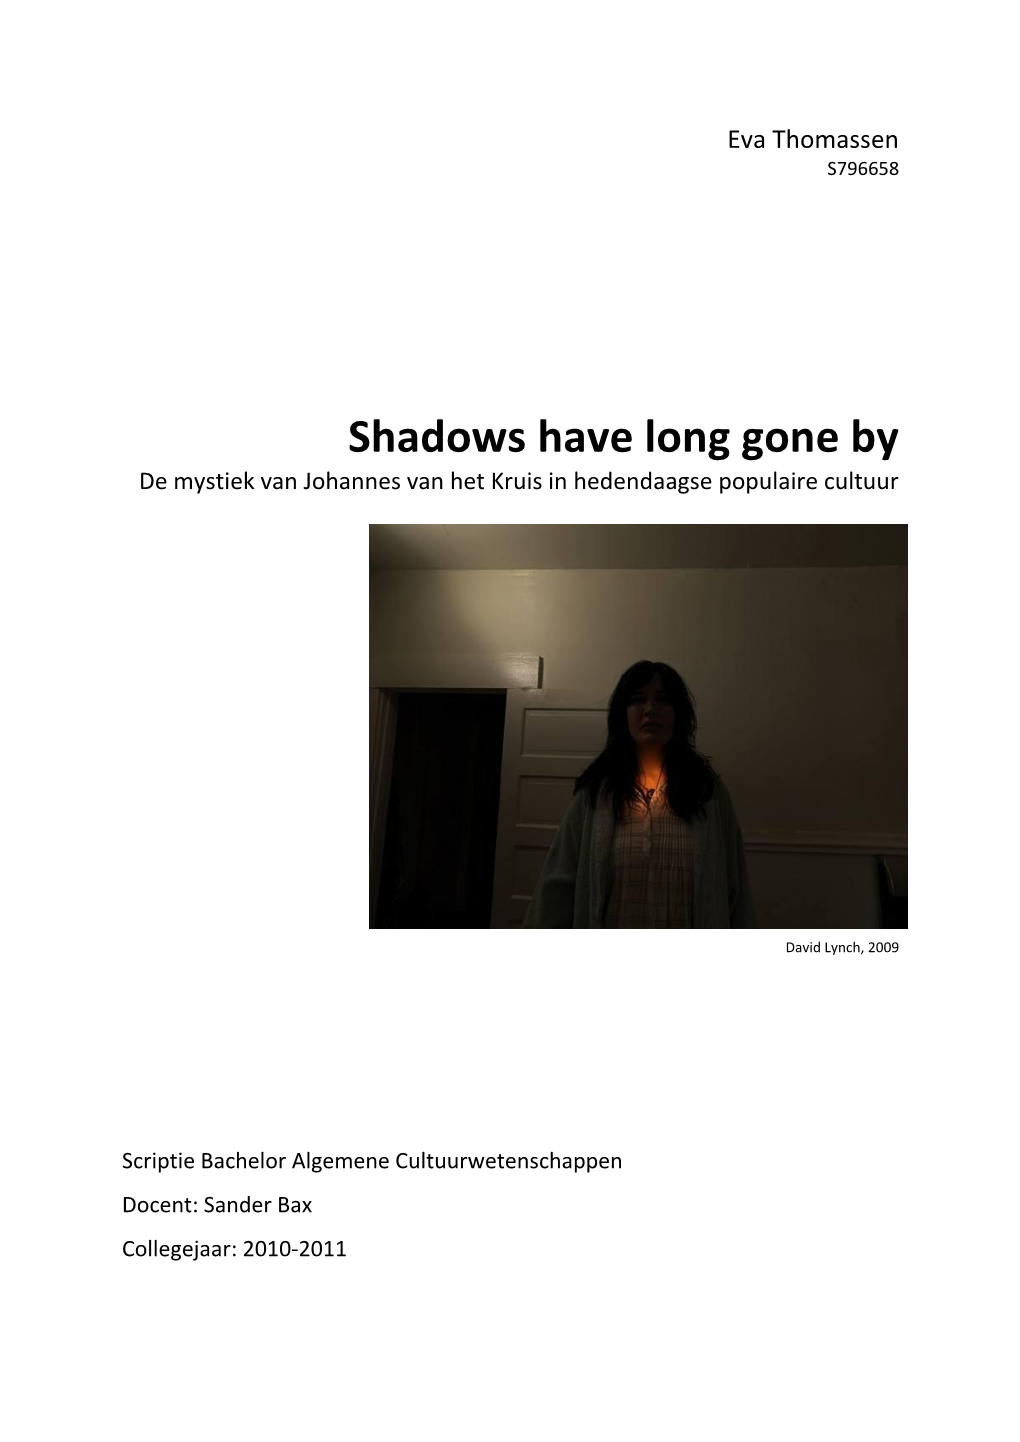 Shadows Have Long Gone by De Mystiek Van Johannes Van Het Kruis in Hedendaagse Populaire Cultuur